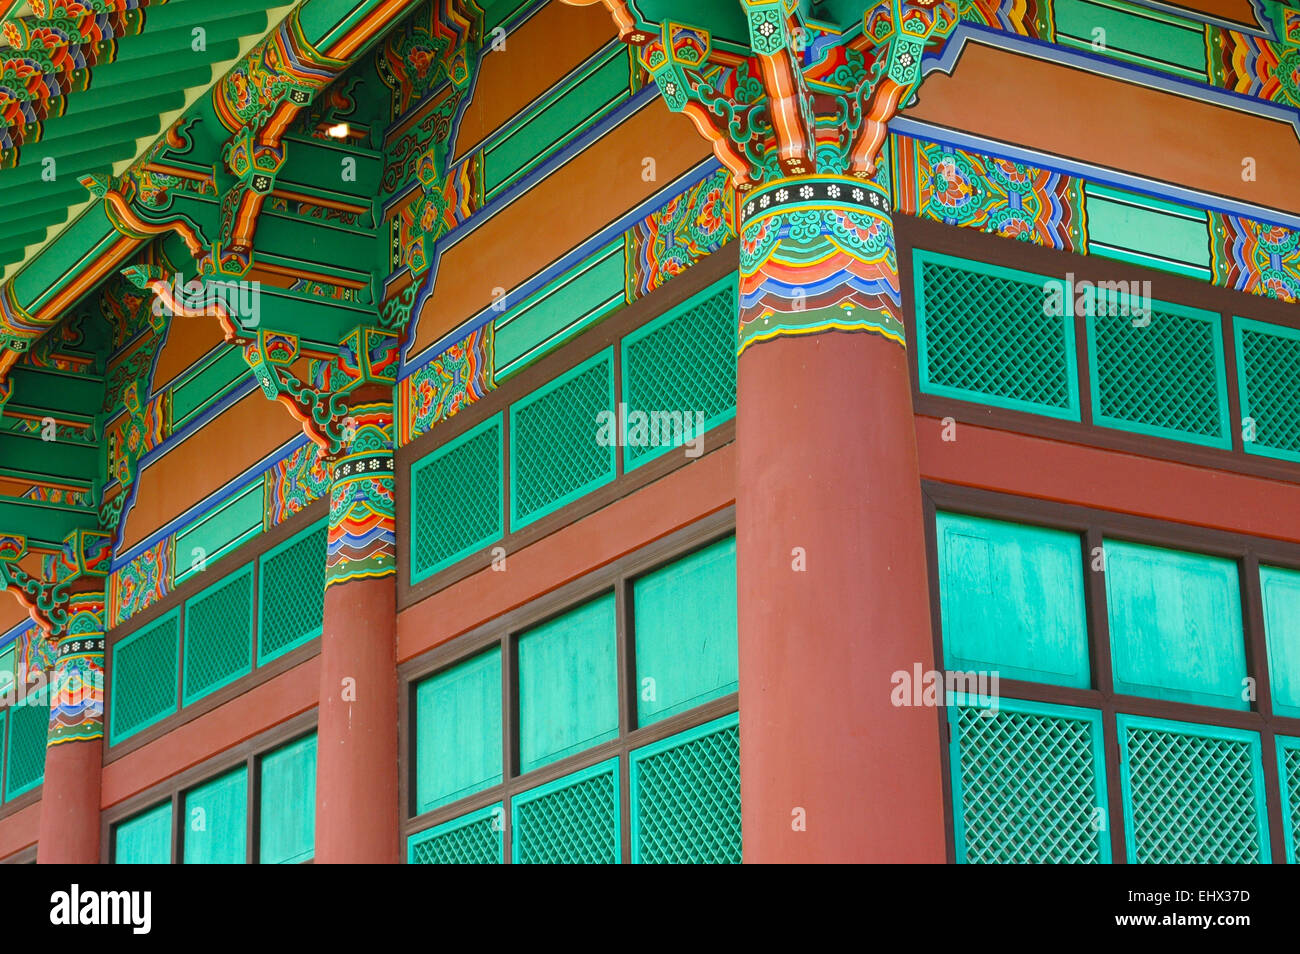 Viajes de detalle de imagen colorida arquitectura coreana Foto de stock